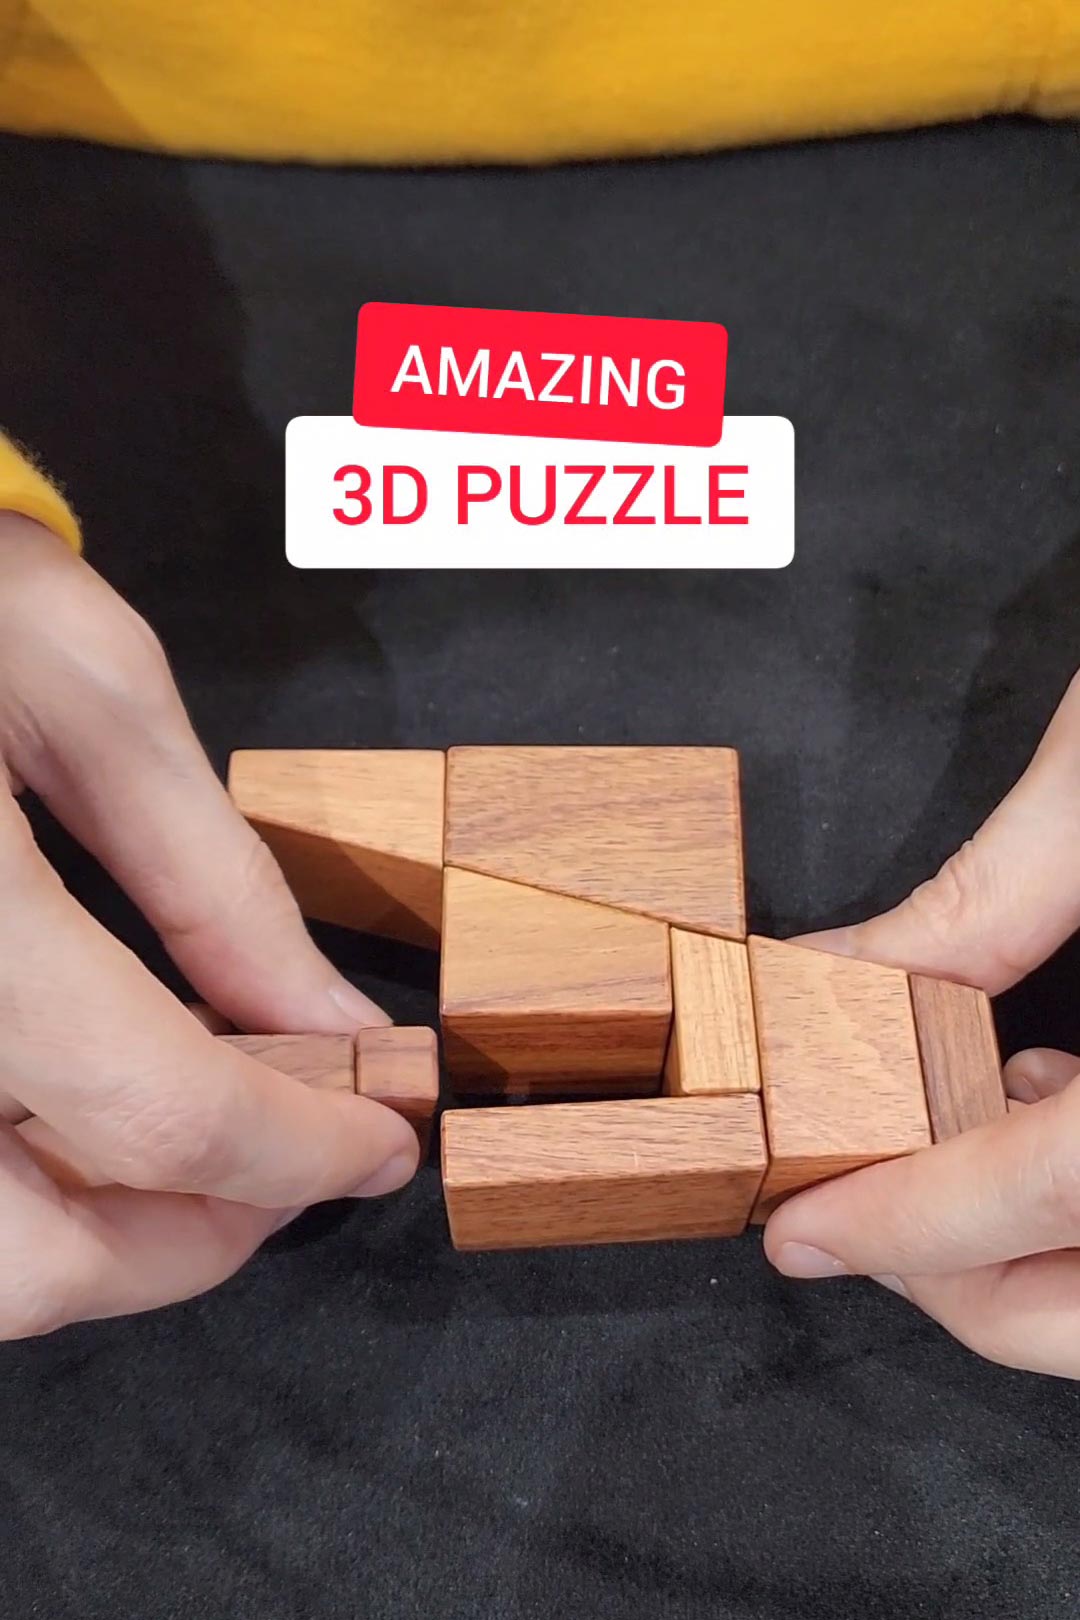 The Amazing 3D Puzzle